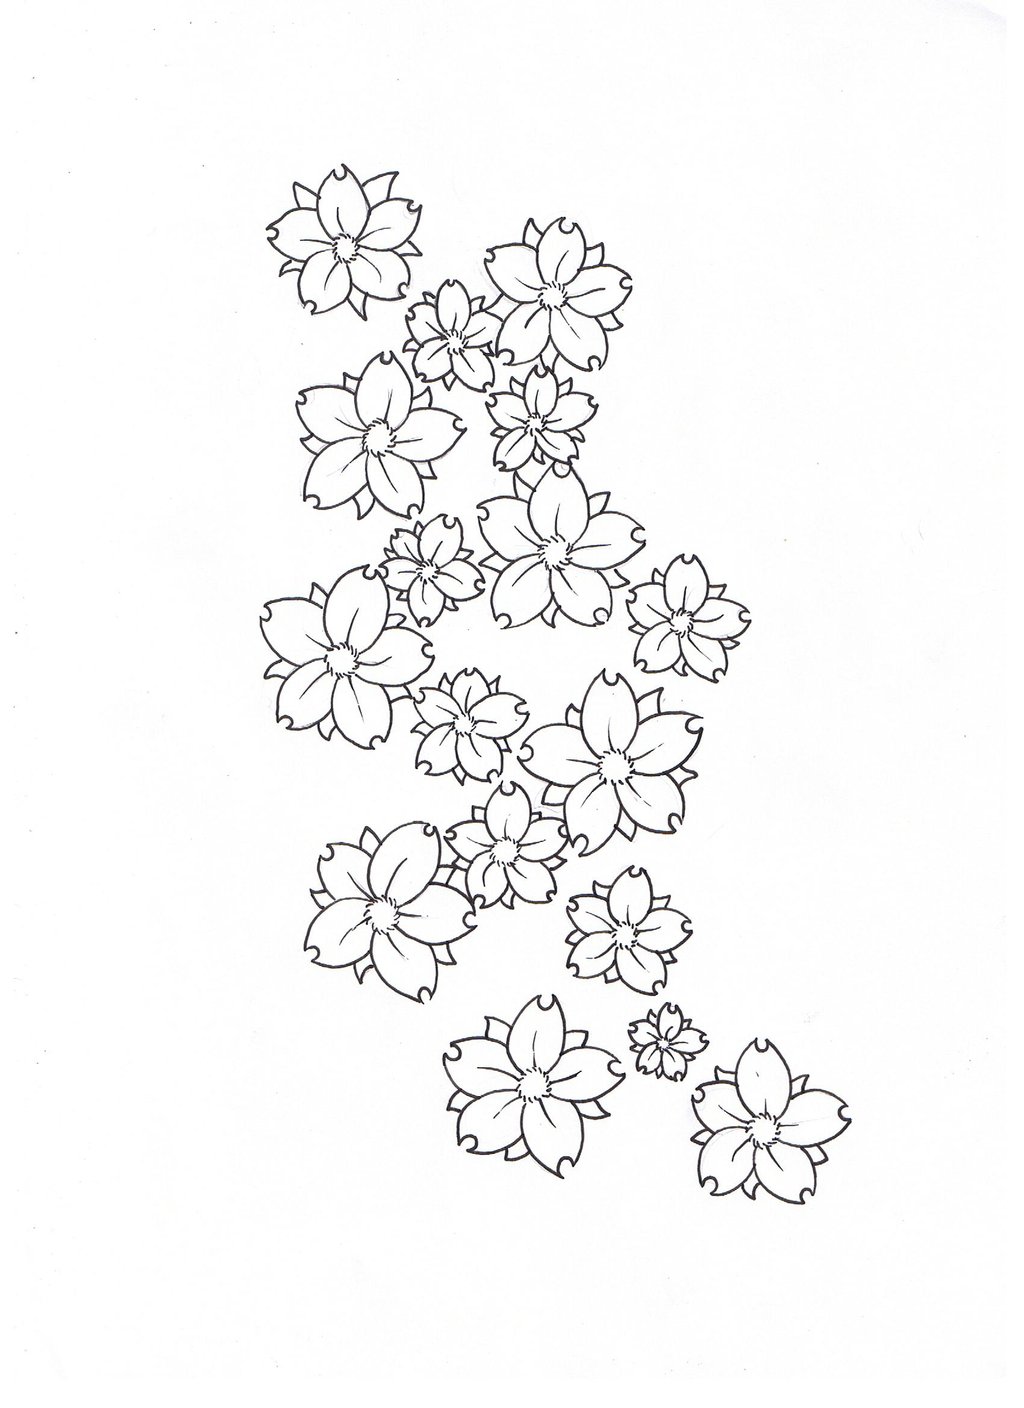 Black Cherry Blossom Flowers Tattoo Stencil By Alex Eff E Upsilon